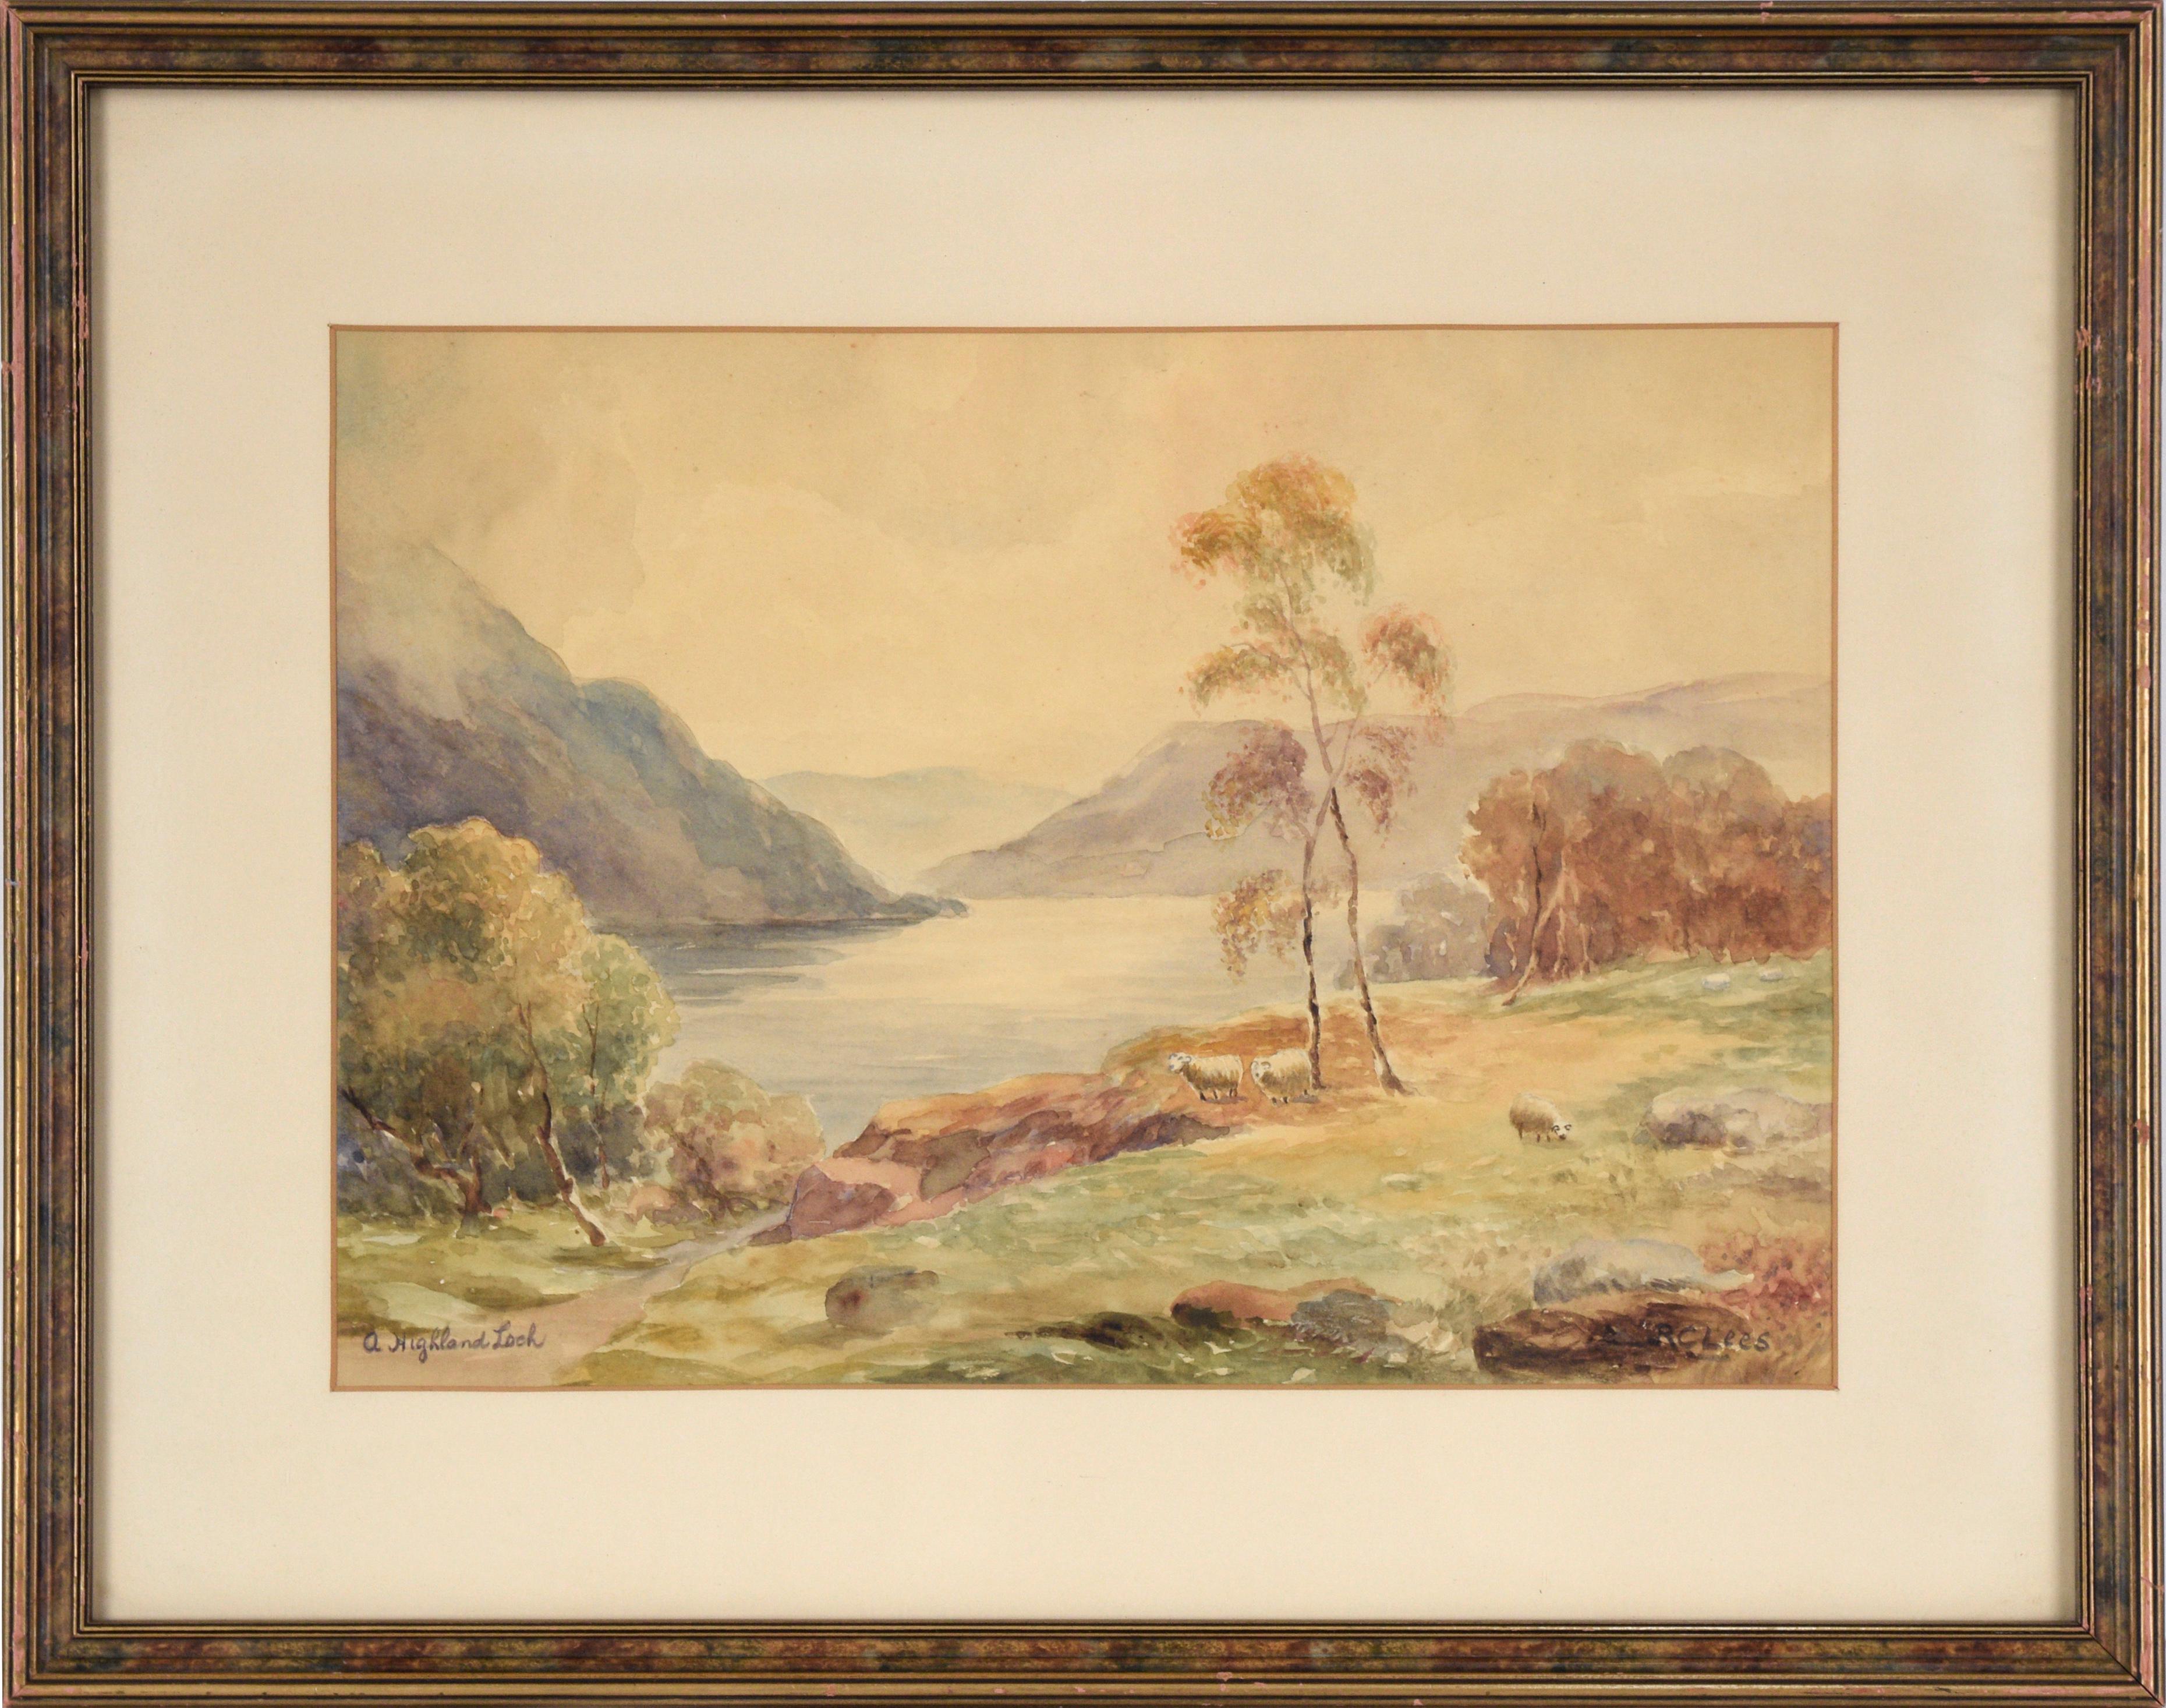 R C Lees Landscape Art - "A Highland Loch" Lake Watercolor Landscape on Paper